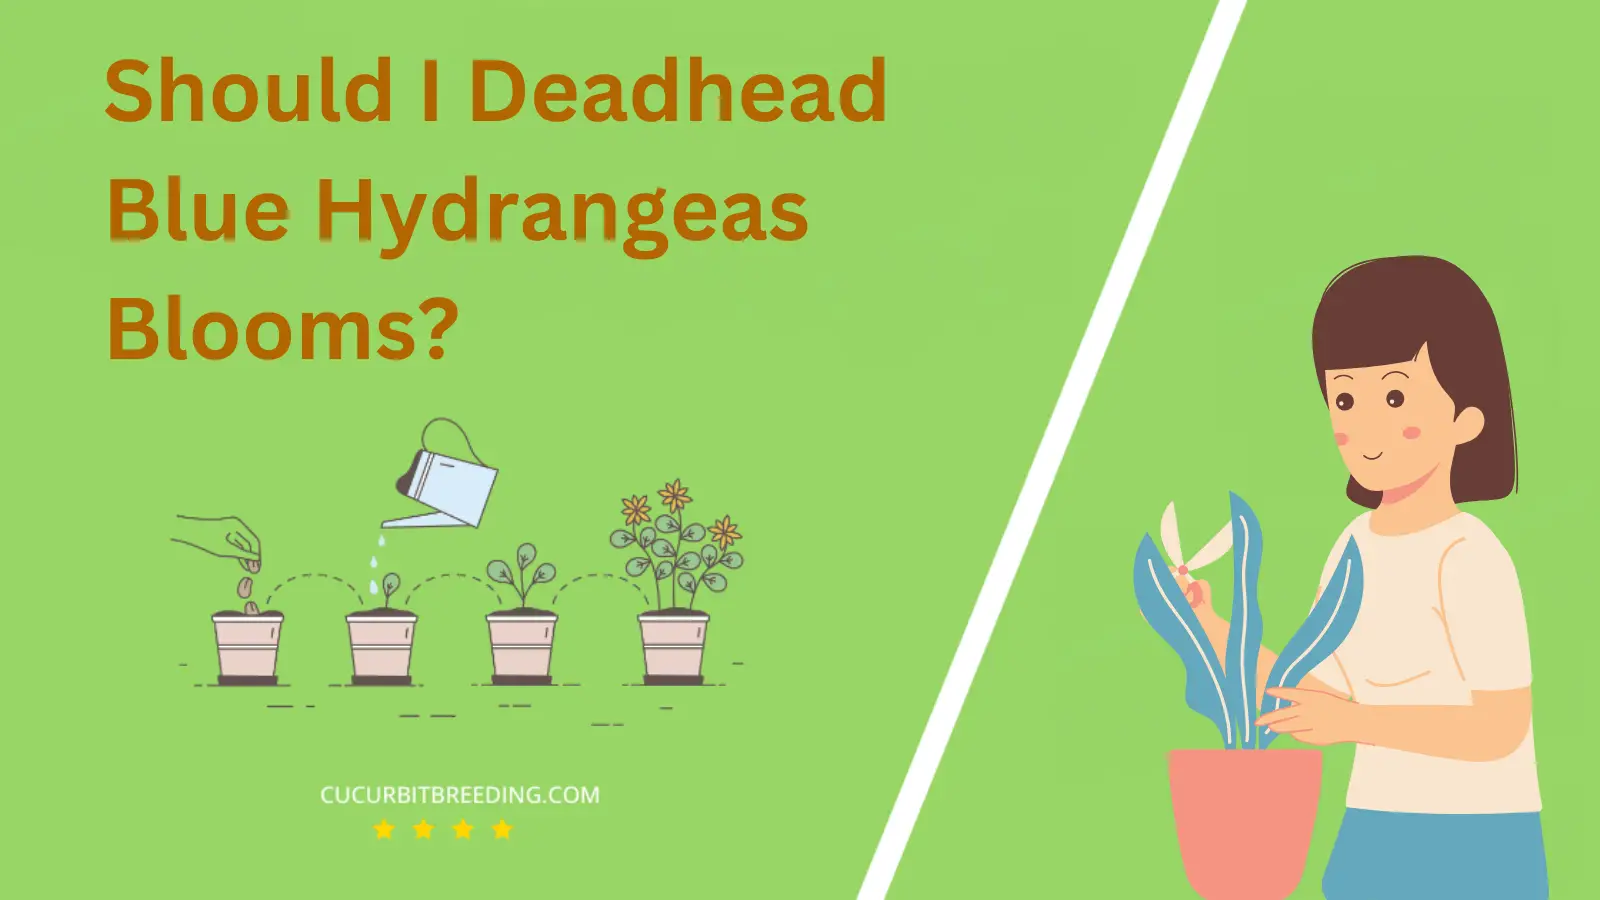 Should I Deadhead Blue Hydrangeas Blooms?